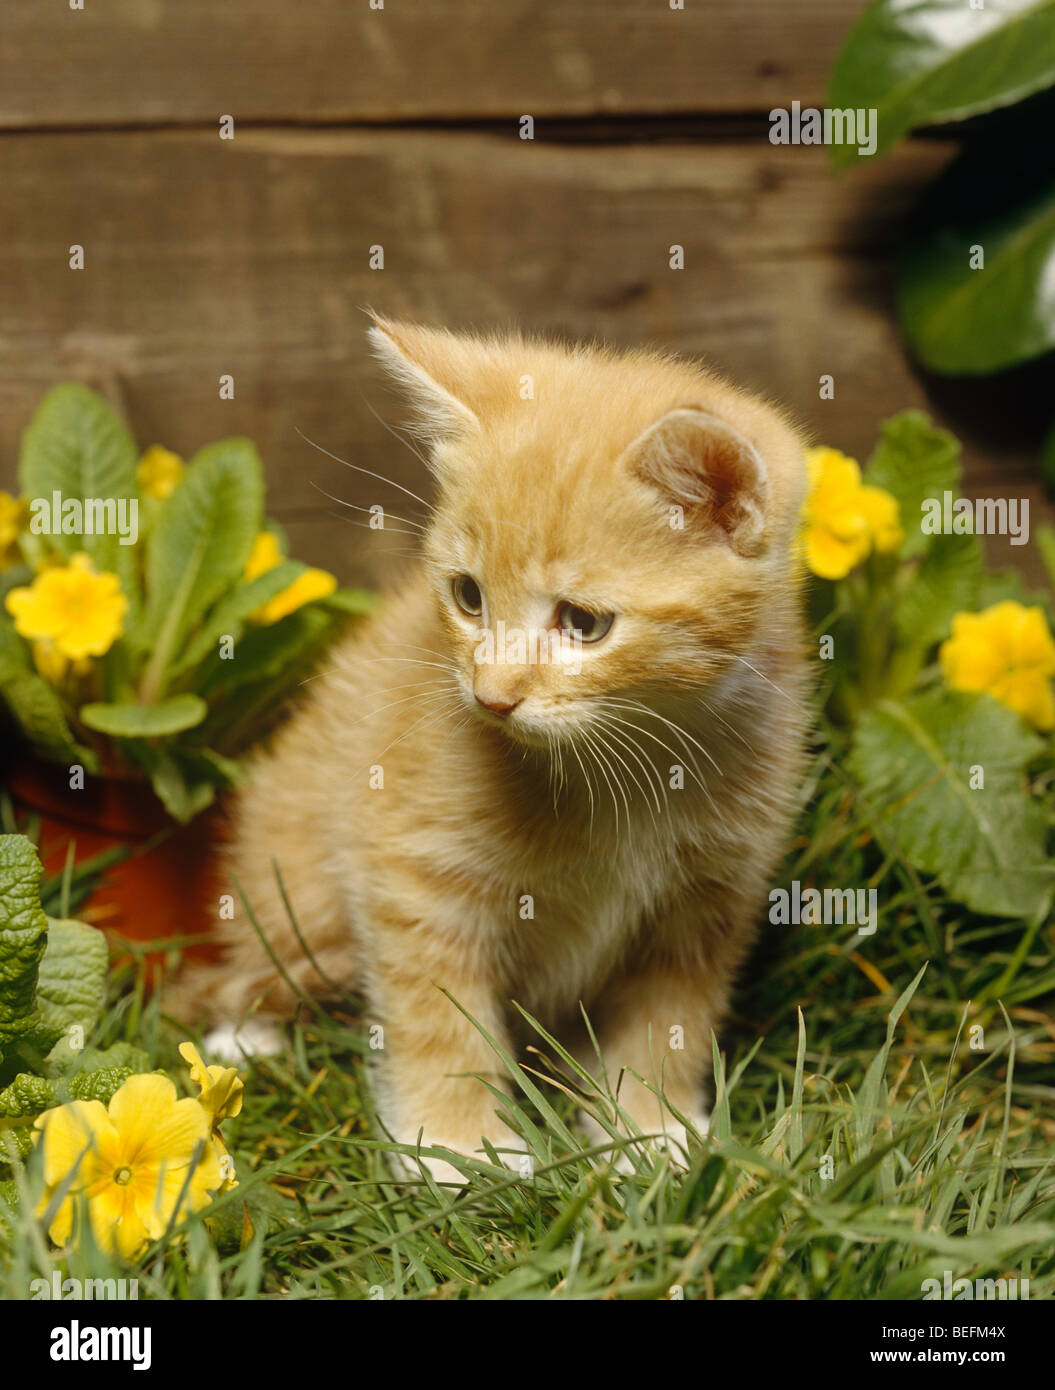 Kitten with yellow flowers Stock Photo